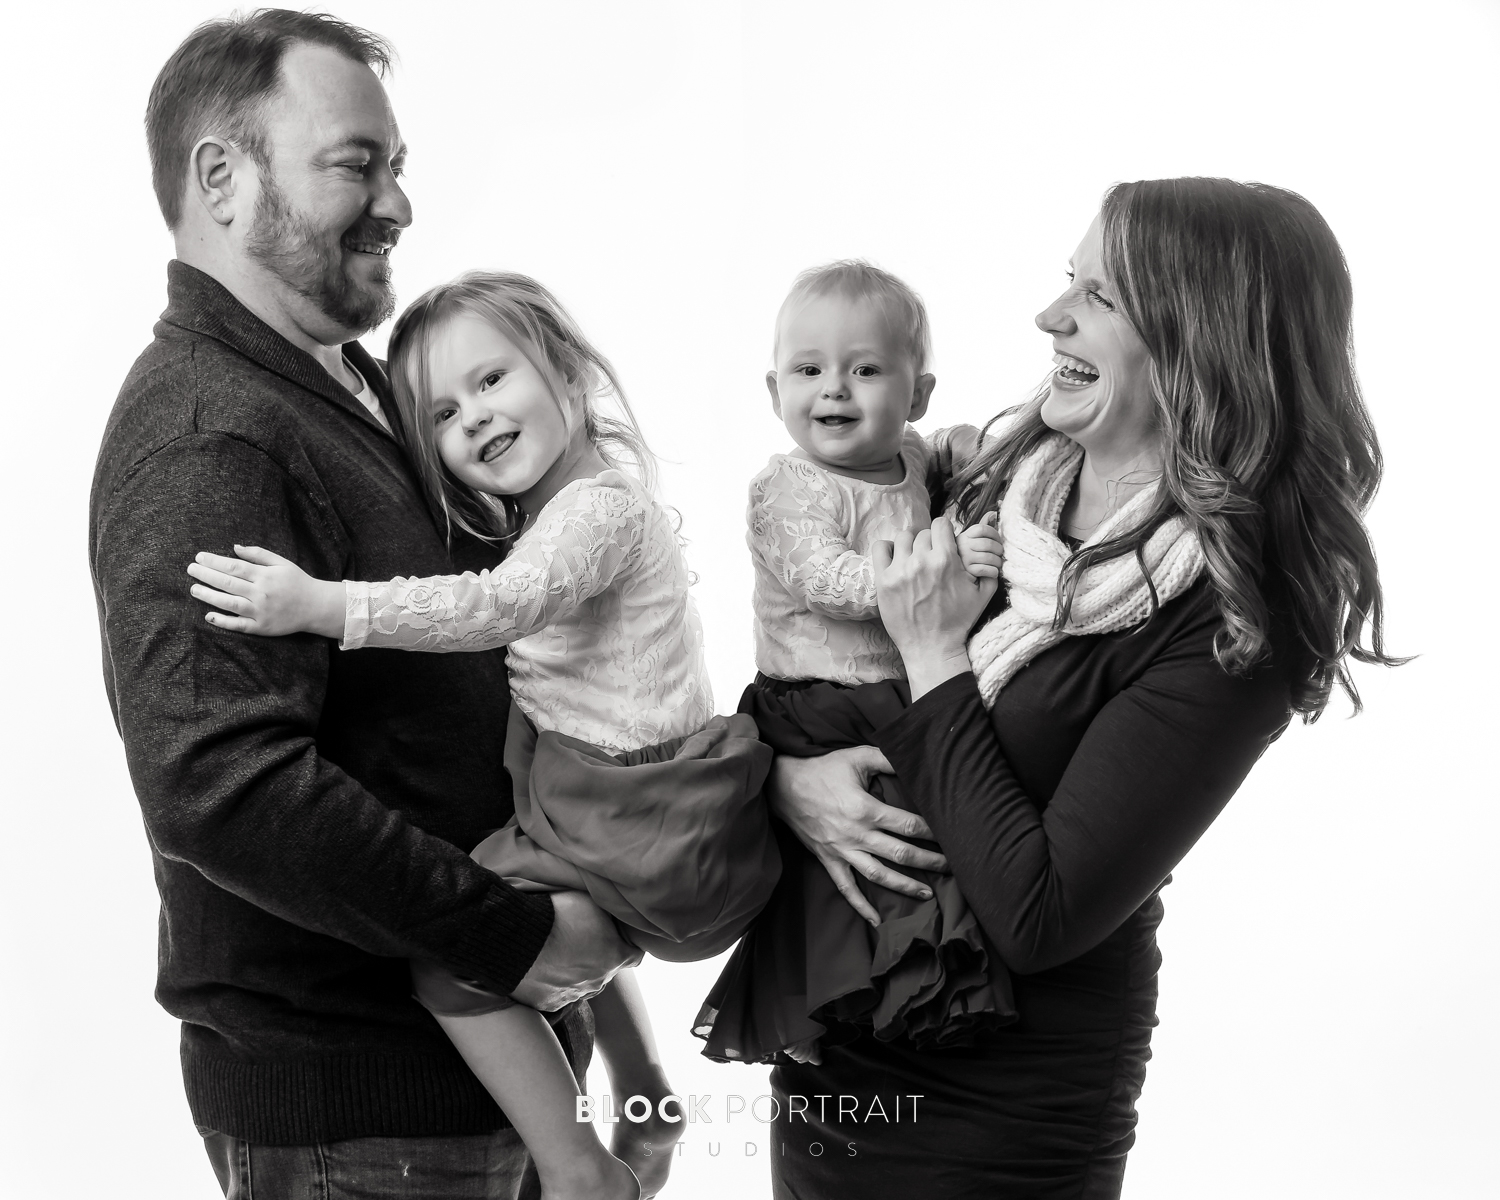 Black and White picture of family by newborn photographer Block Portrait Studios in Saint Paul Minnesota studio